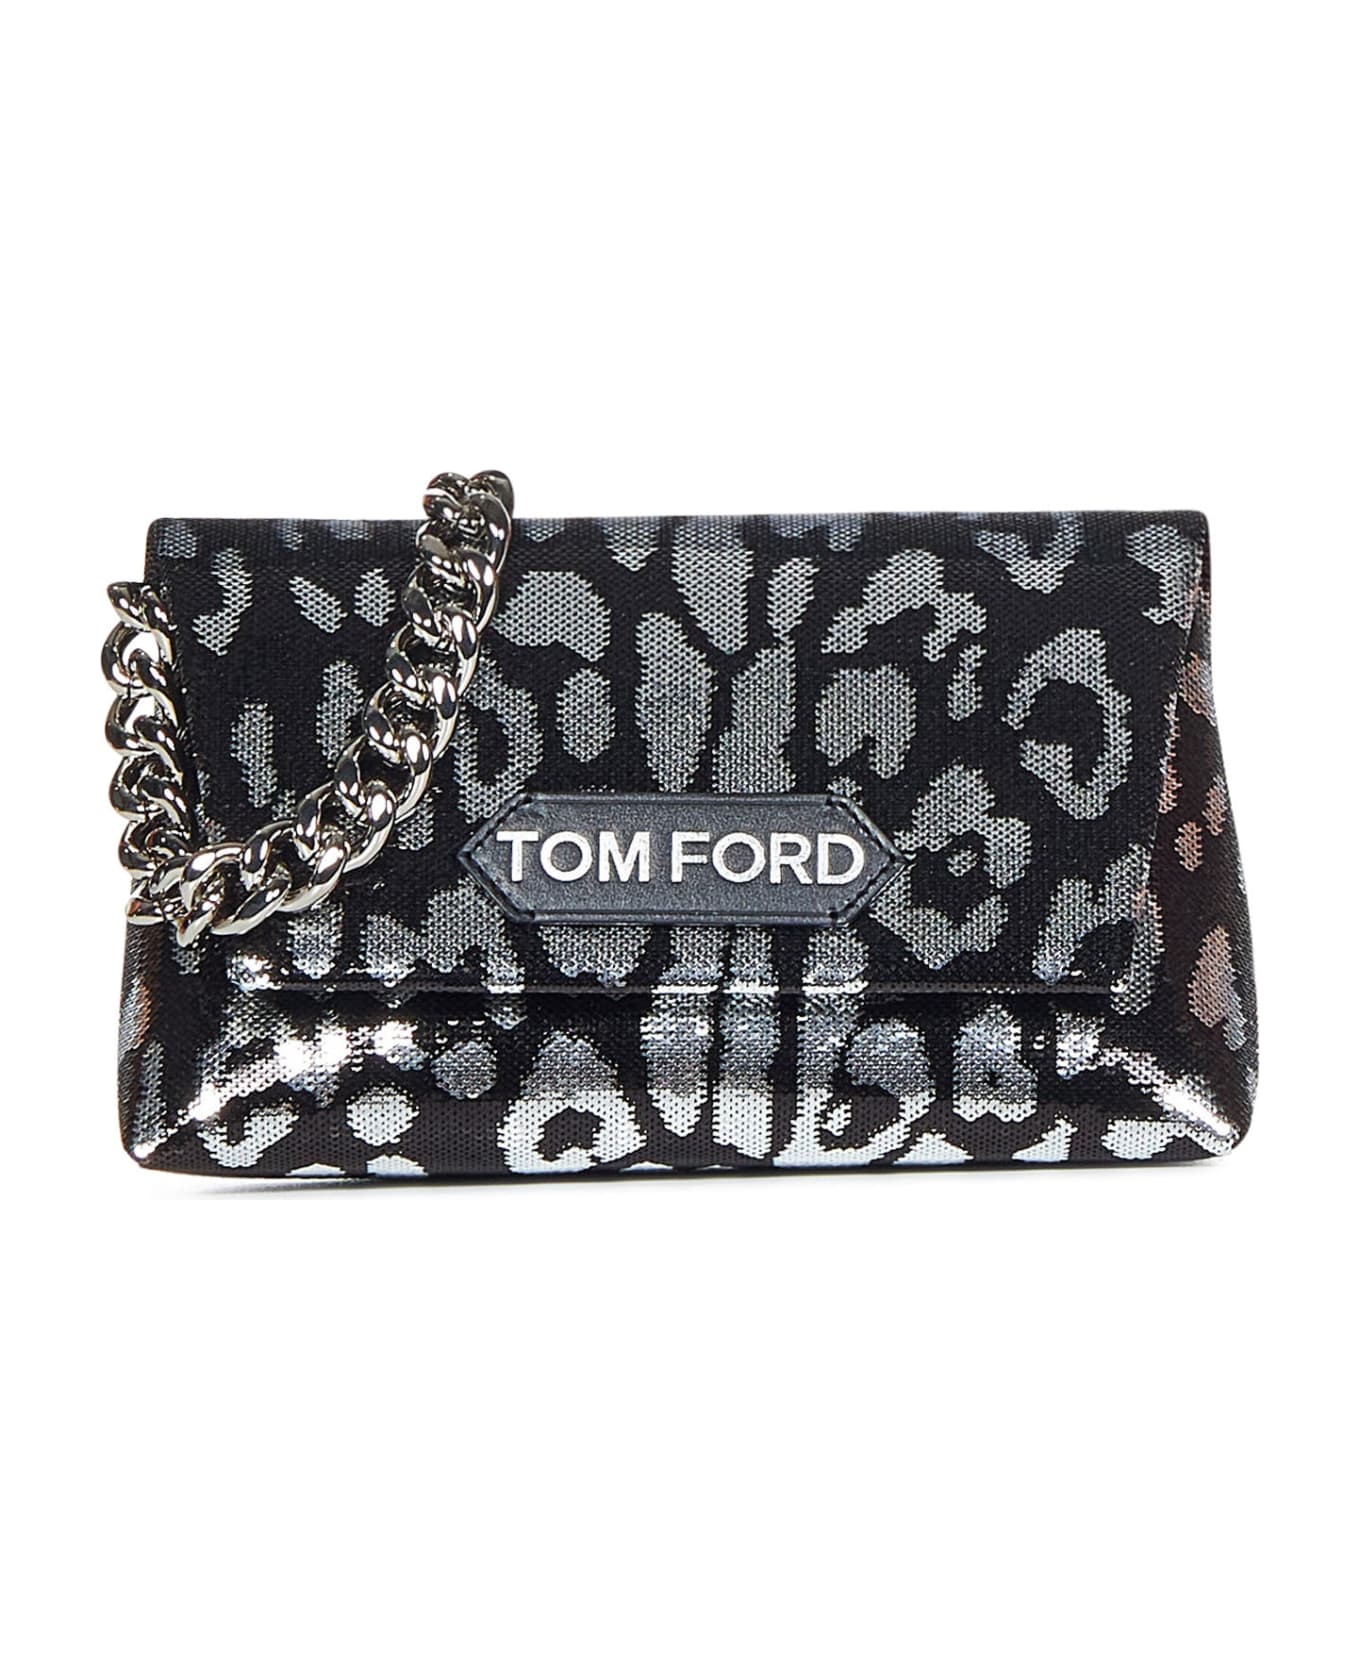 Tom Ford Handbag - Silver